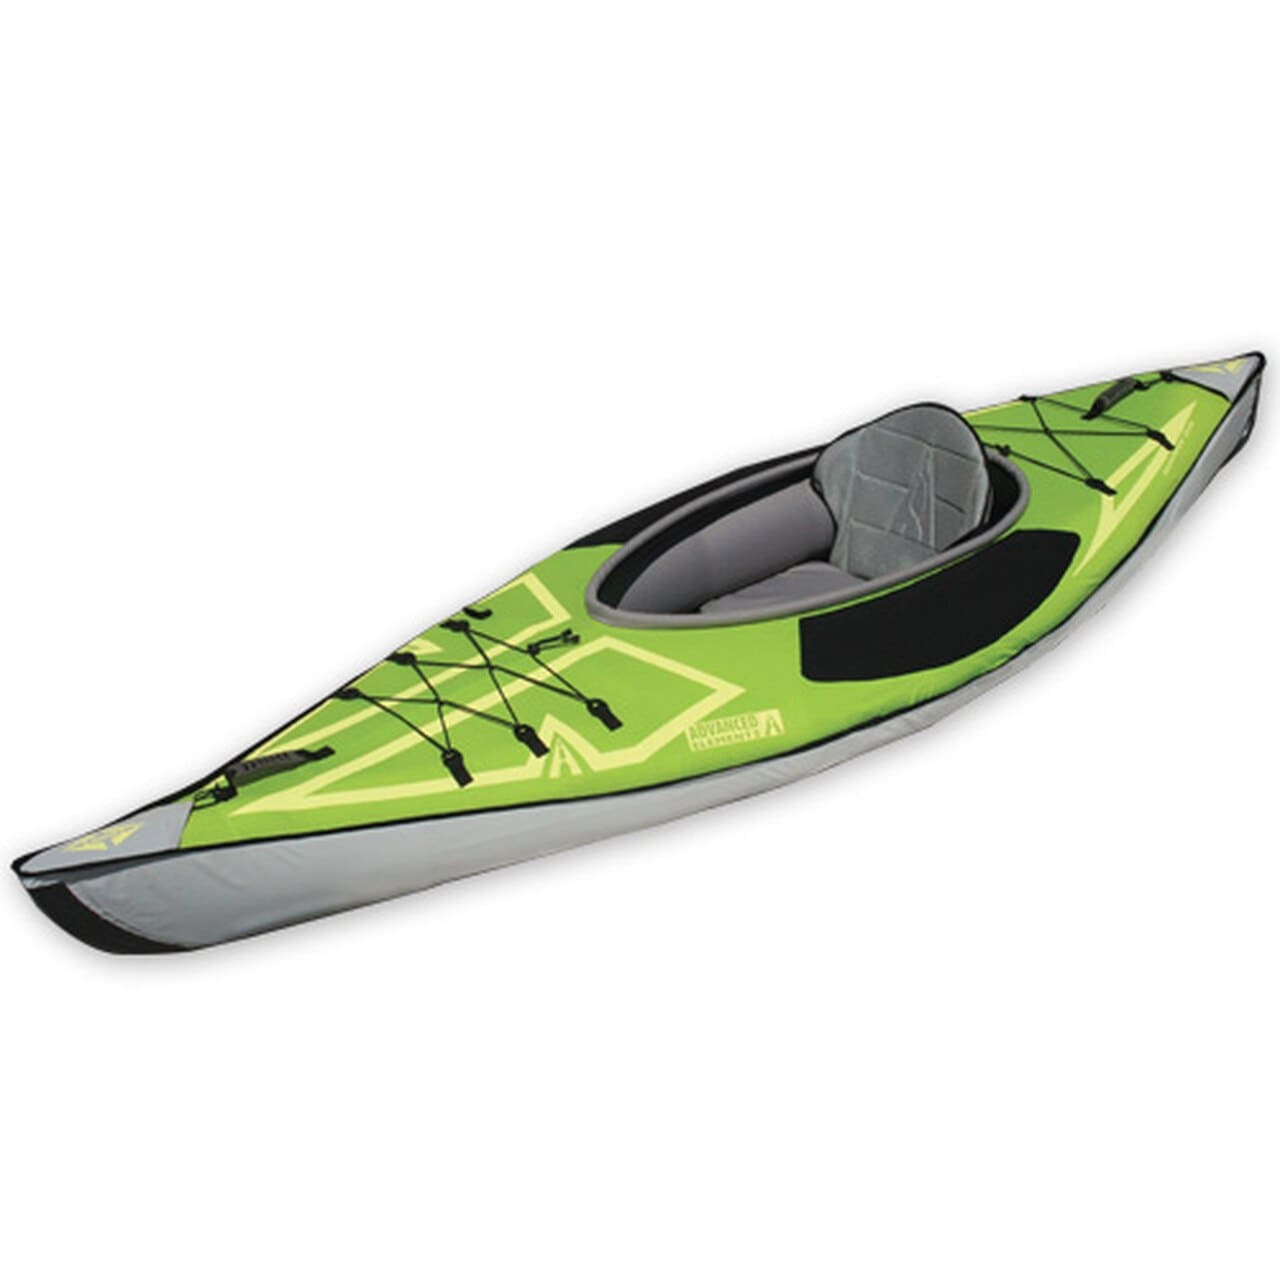 ADVANCED ELEMENTS Inflatable Kayak Advanced Elements AdvancedFrame Ultralite Kayak